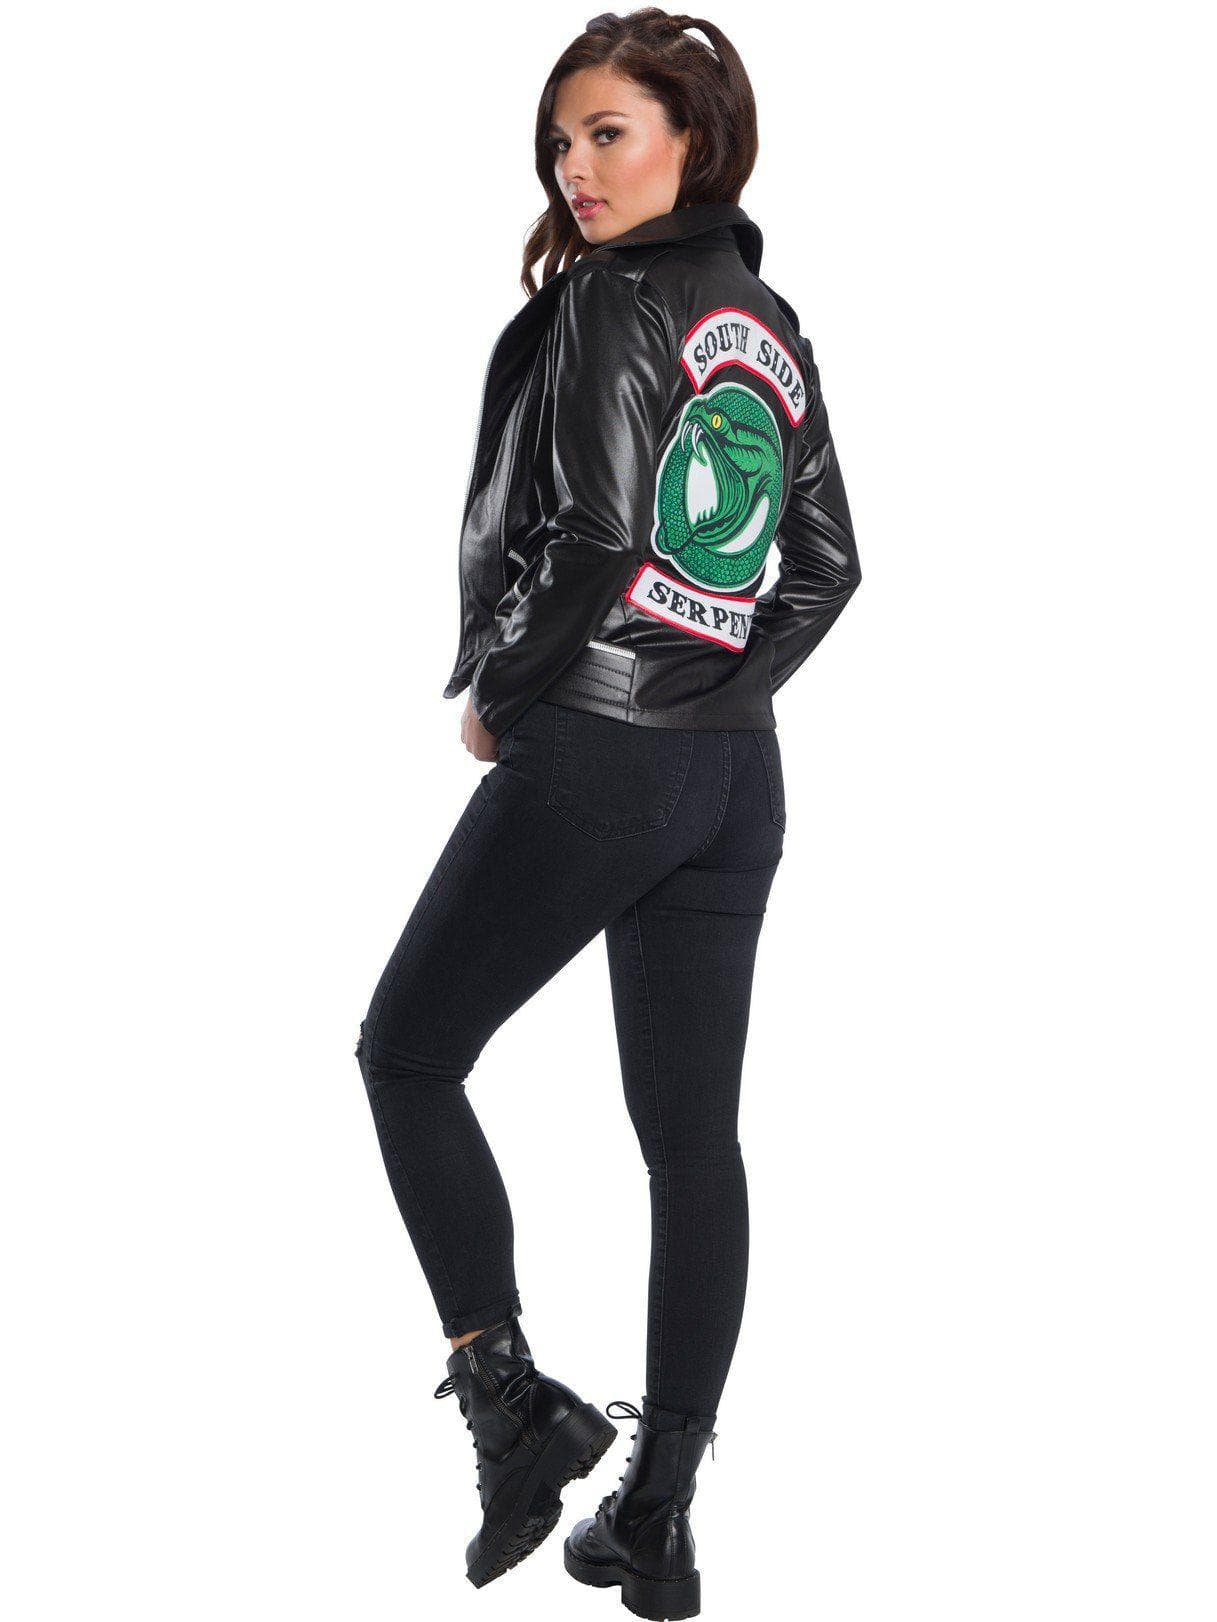 Adult Riverdale Toni Topaz Deluxe Jacket - costumes.com